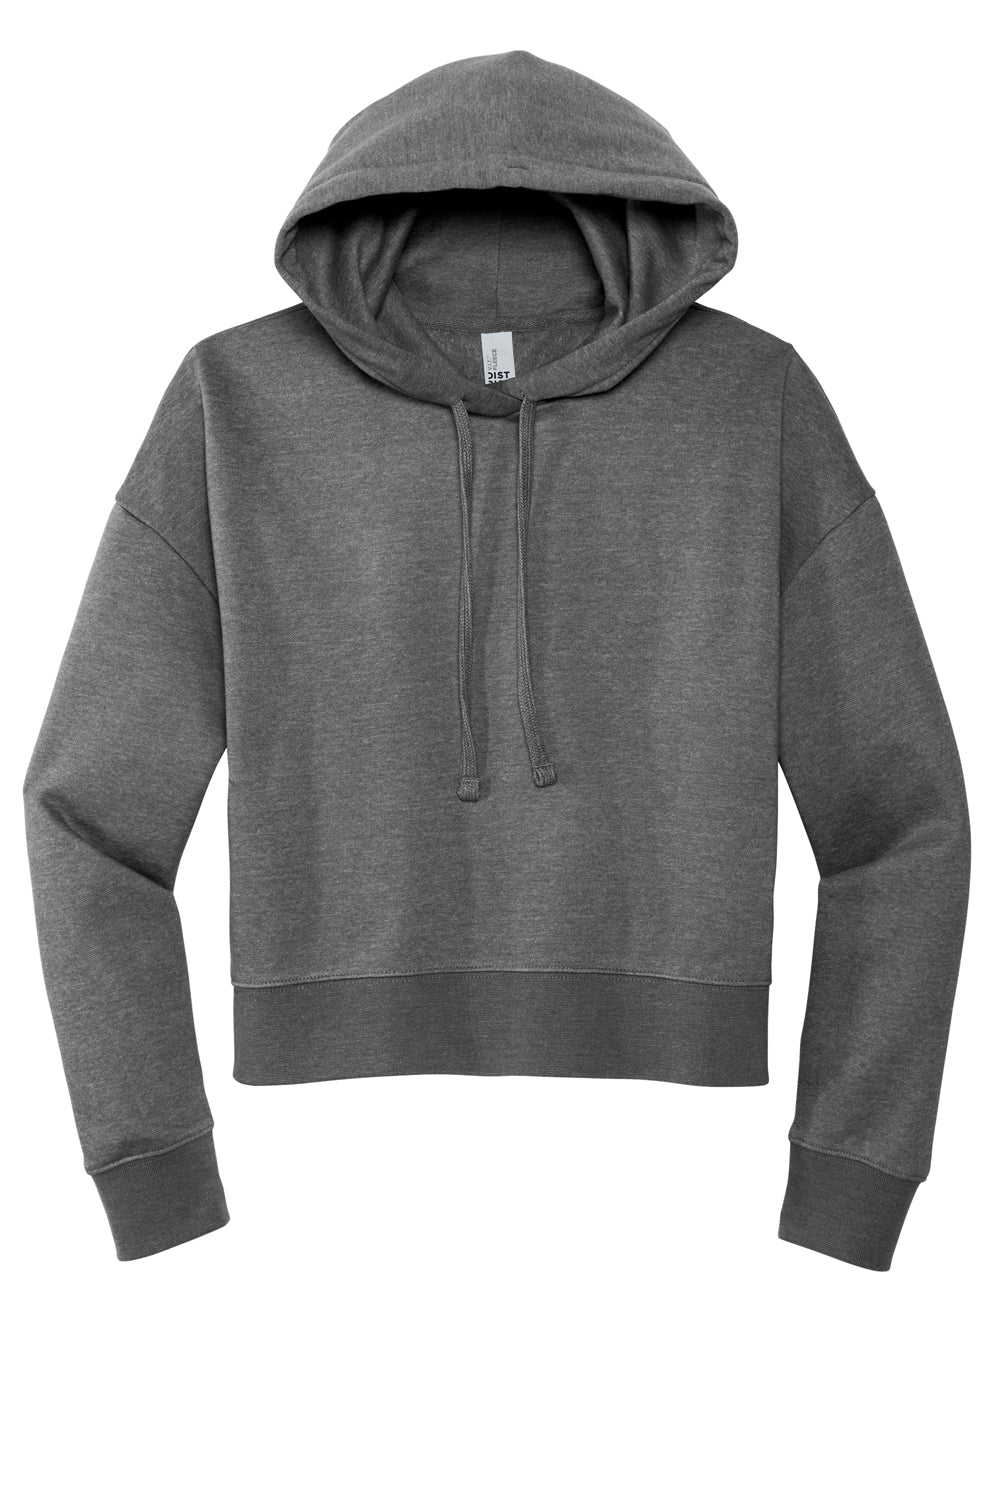 District DT6101 V.I.T. Fleece Hooded Sweatshirt Hoodie Heathered Charcoal Grey Flat Front